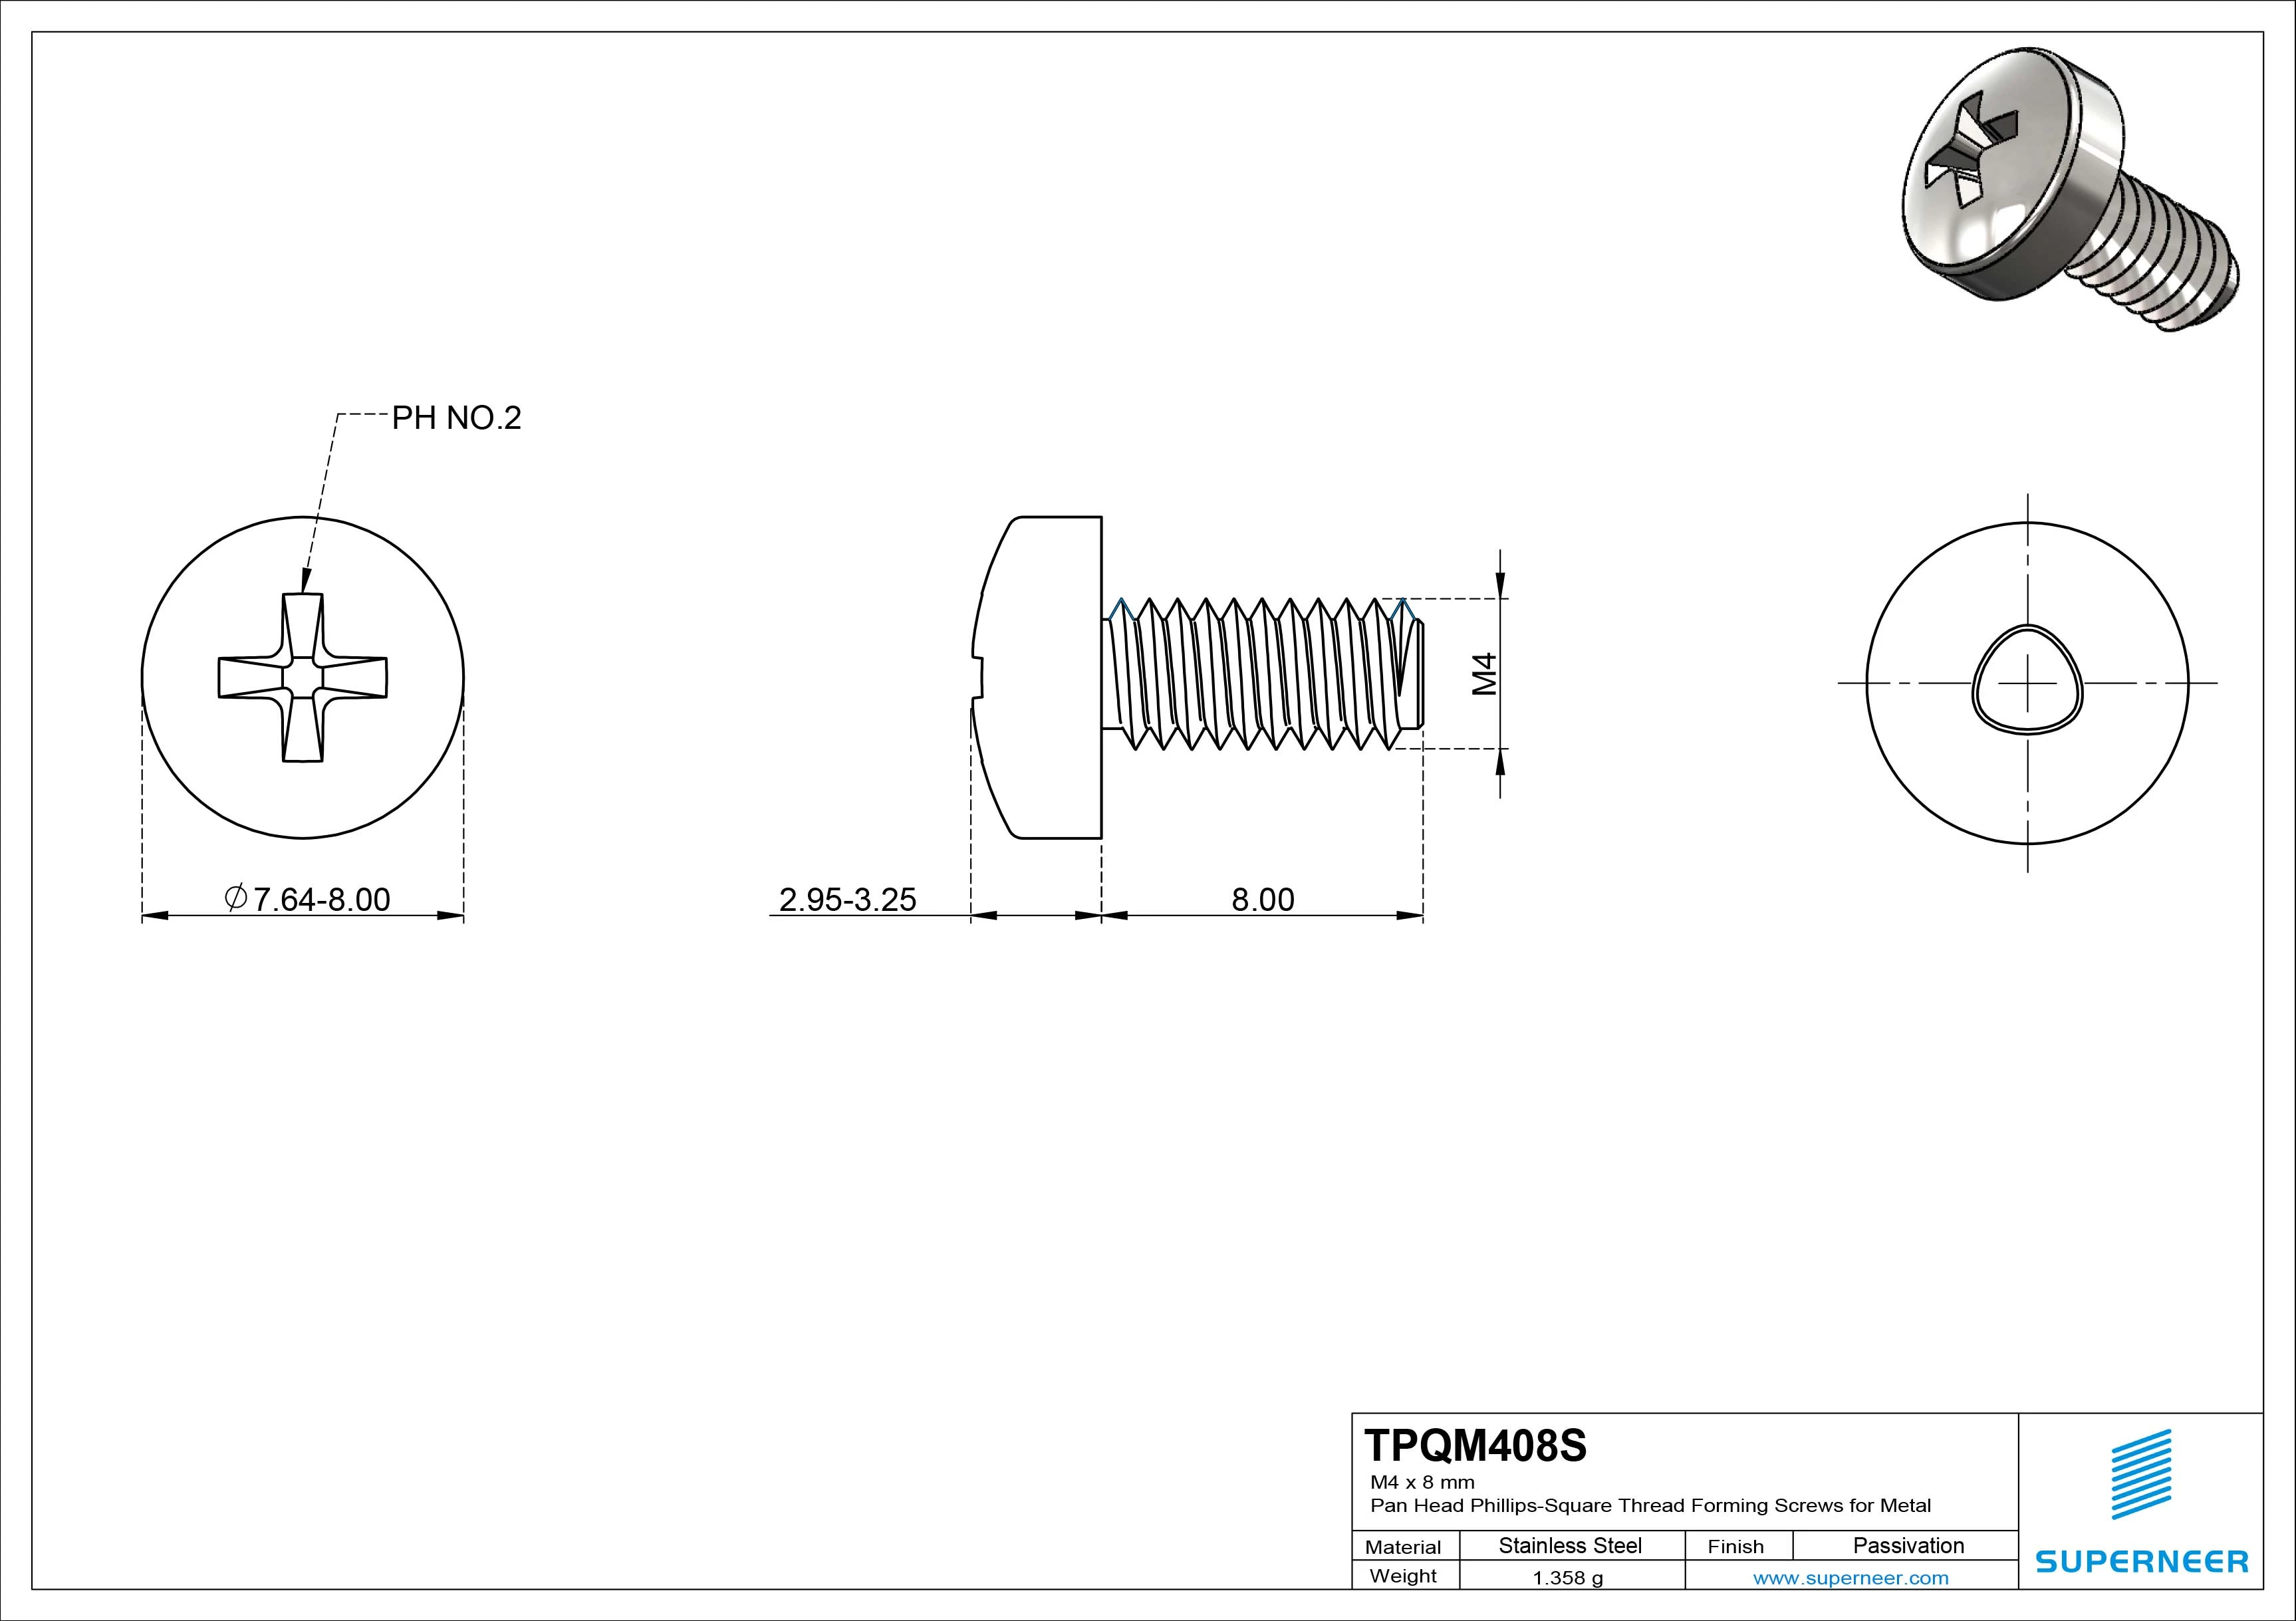 M4 × 8mm Pan Head Phillips-Square Thread Forming Screws for Metal SUS304 Stainless Steel Inox